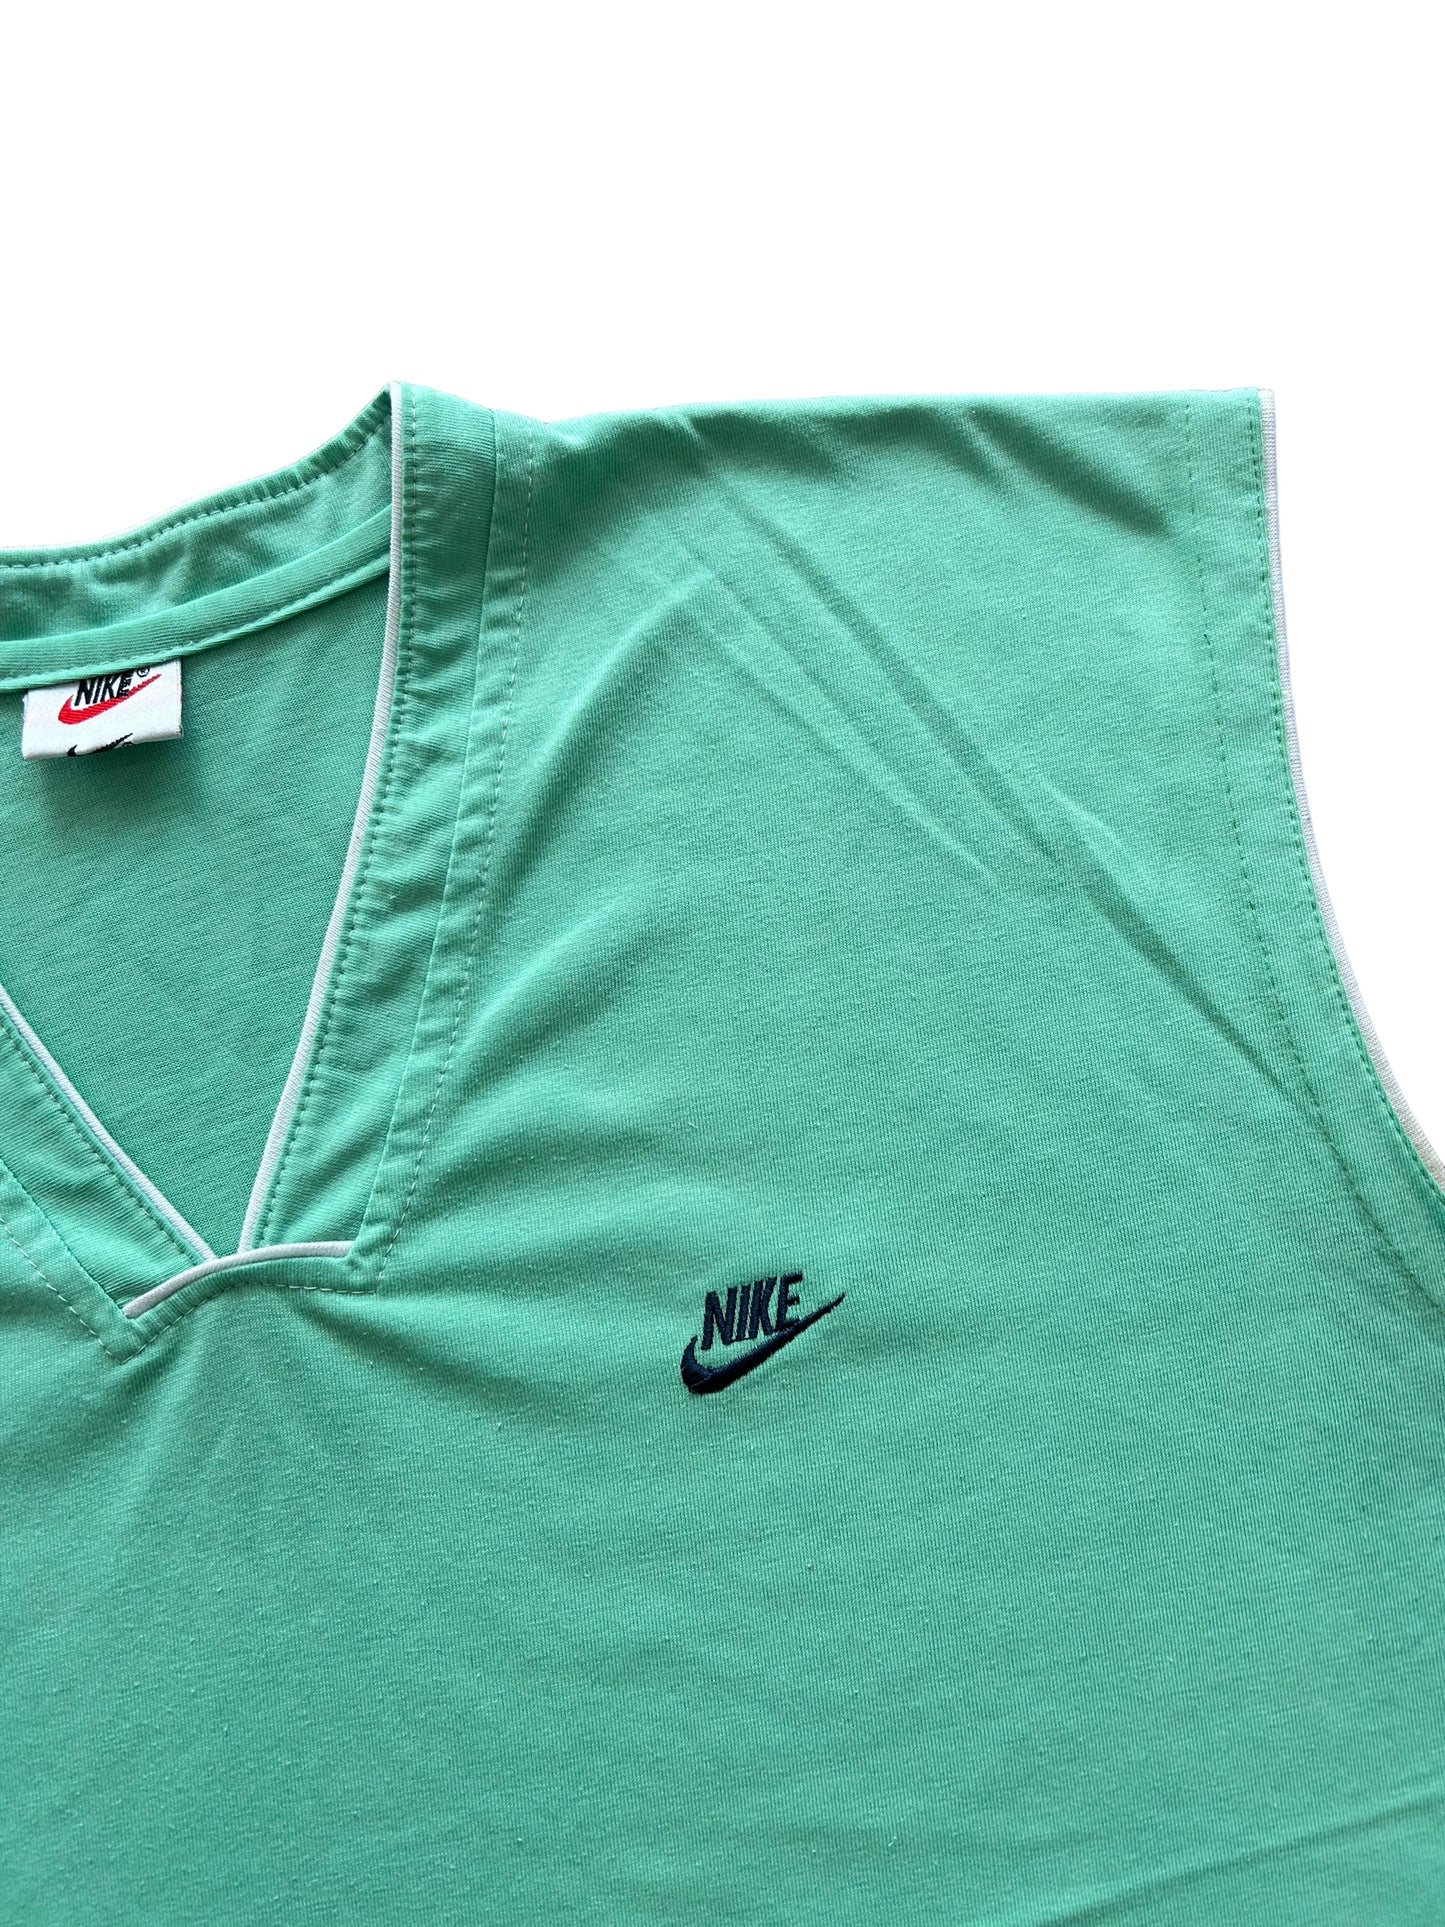 90's Nike Singlet